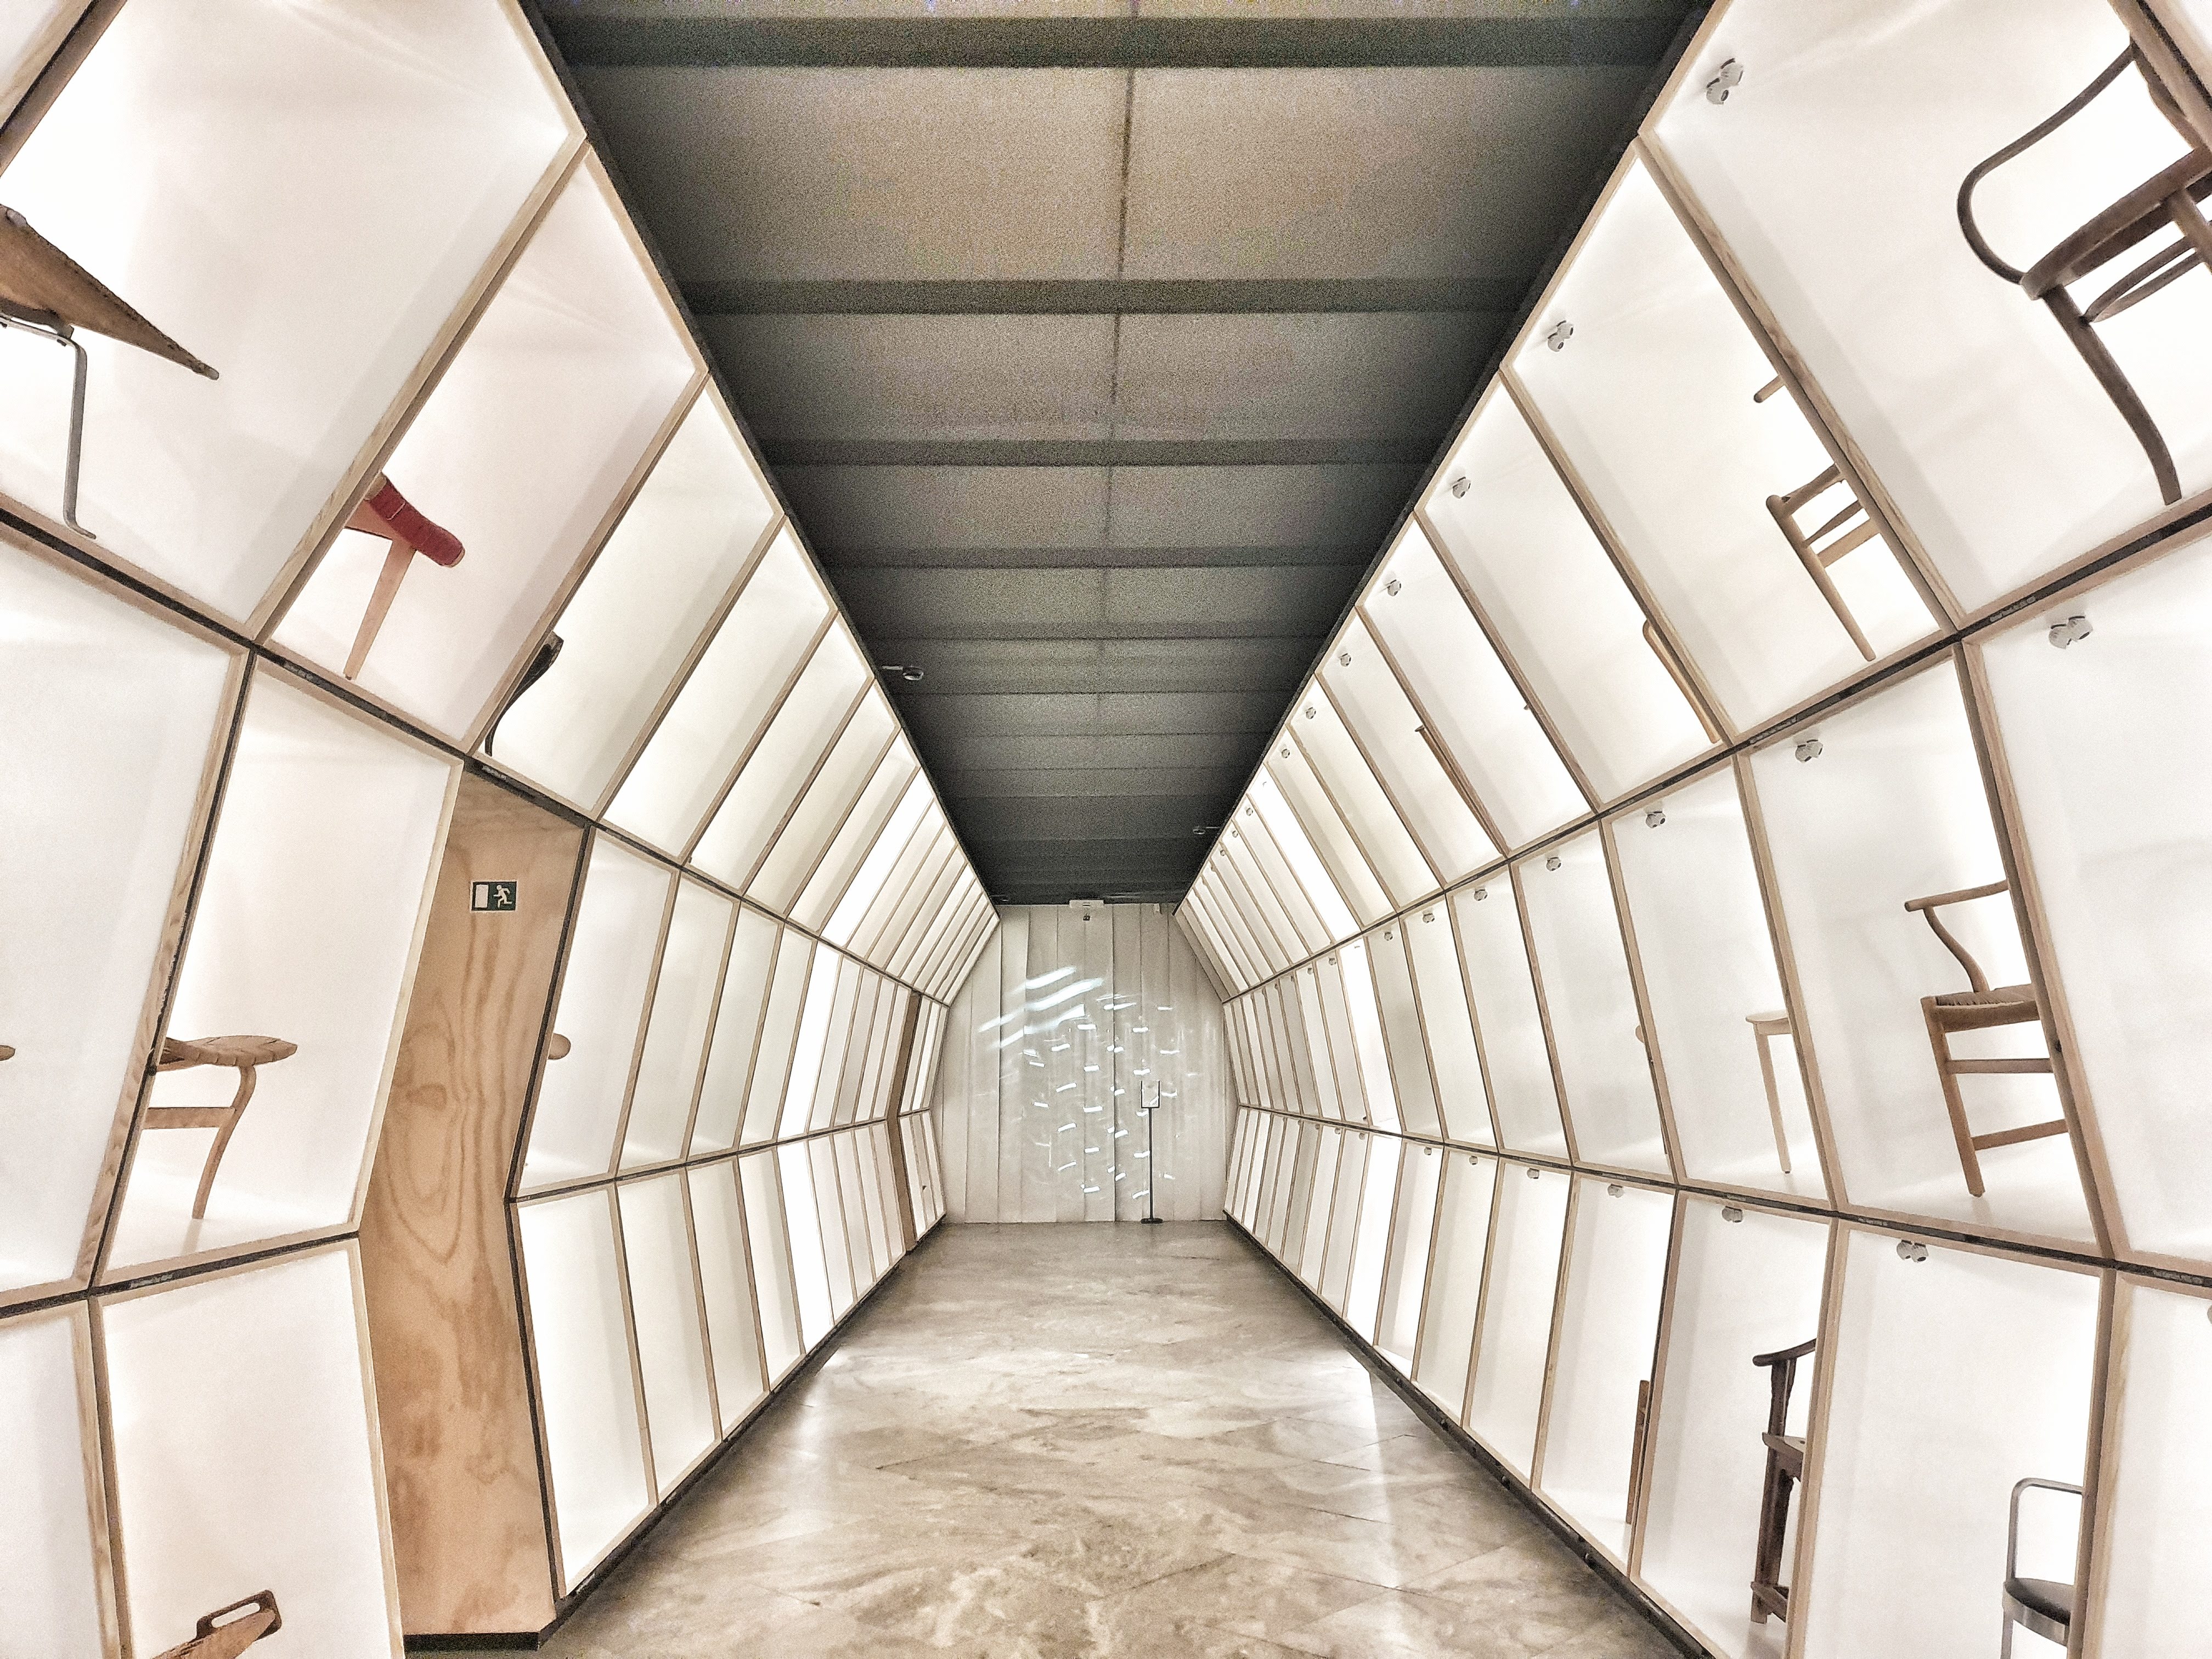 Copenhagen’s Design Philosophies: A sneak peek inside Design Museum Denmark